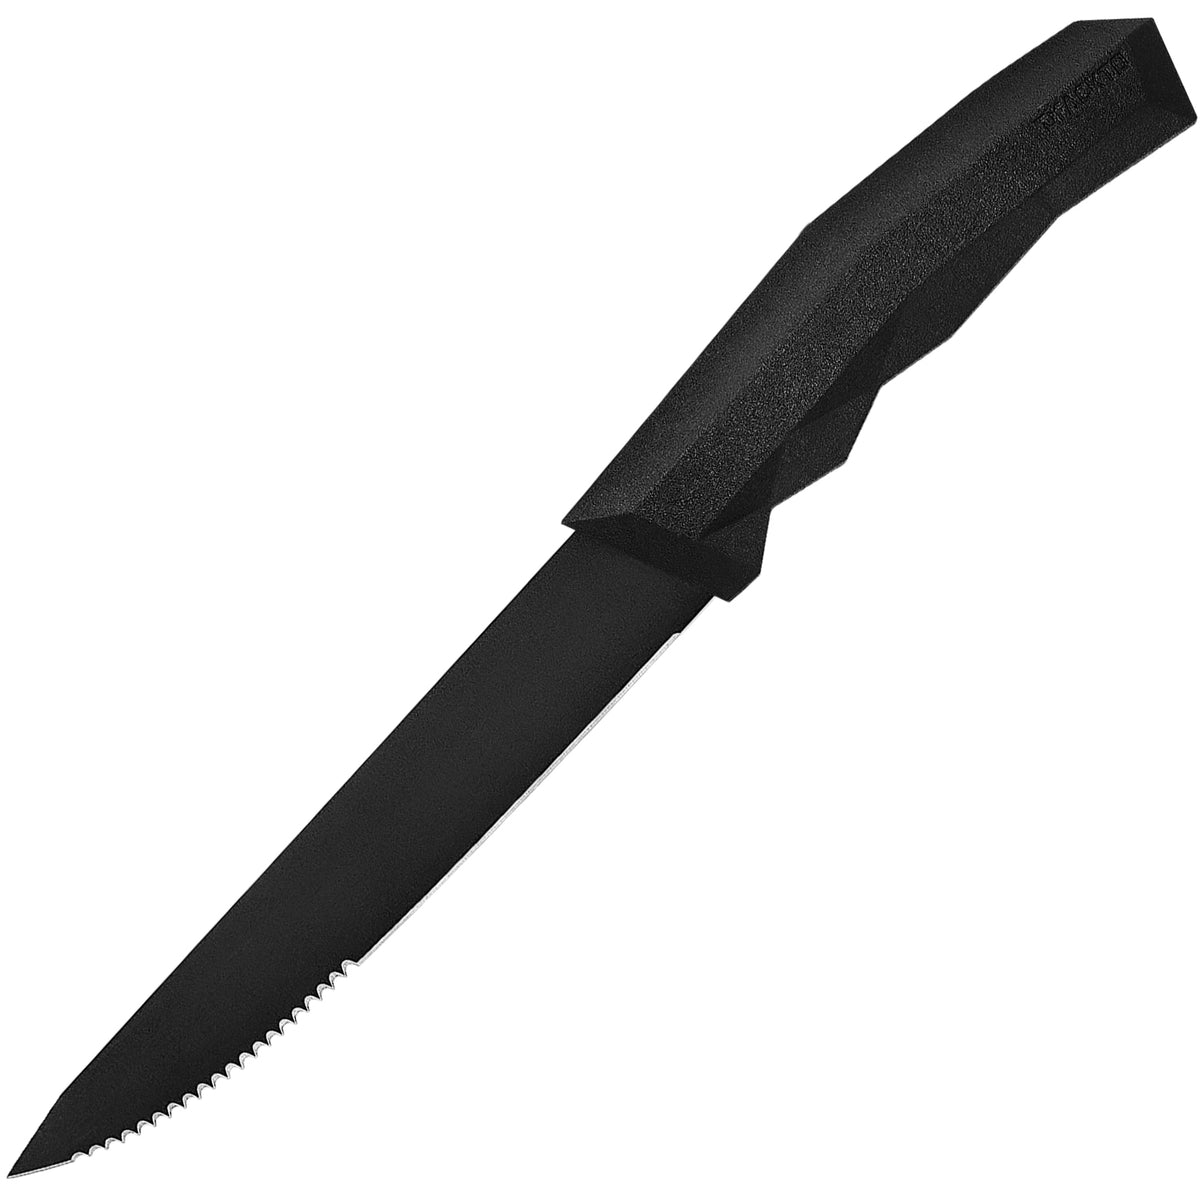 Boulder Series™ Replacement 5" Steak Knife